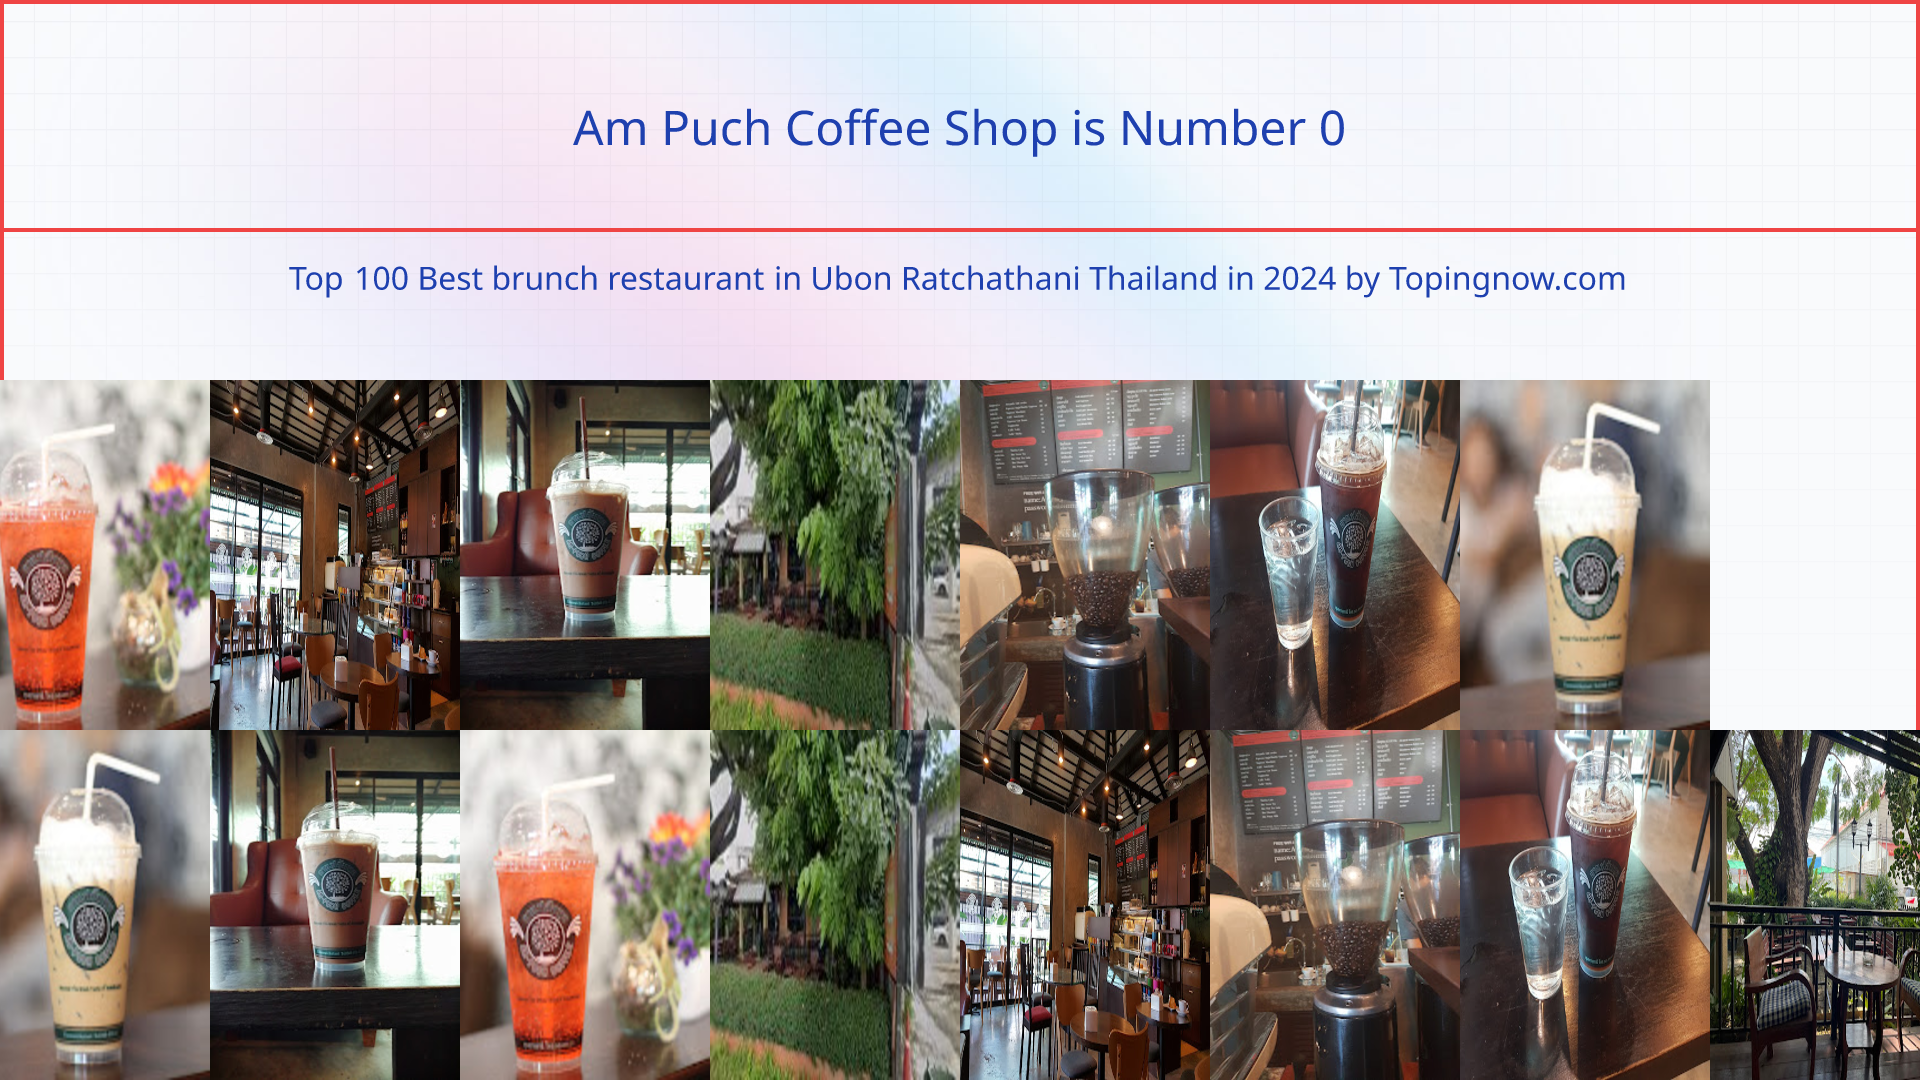 Am Puch Coffee Shop: Top 100 Best brunch restaurant in Ubon Ratchathani Thailand in 2024